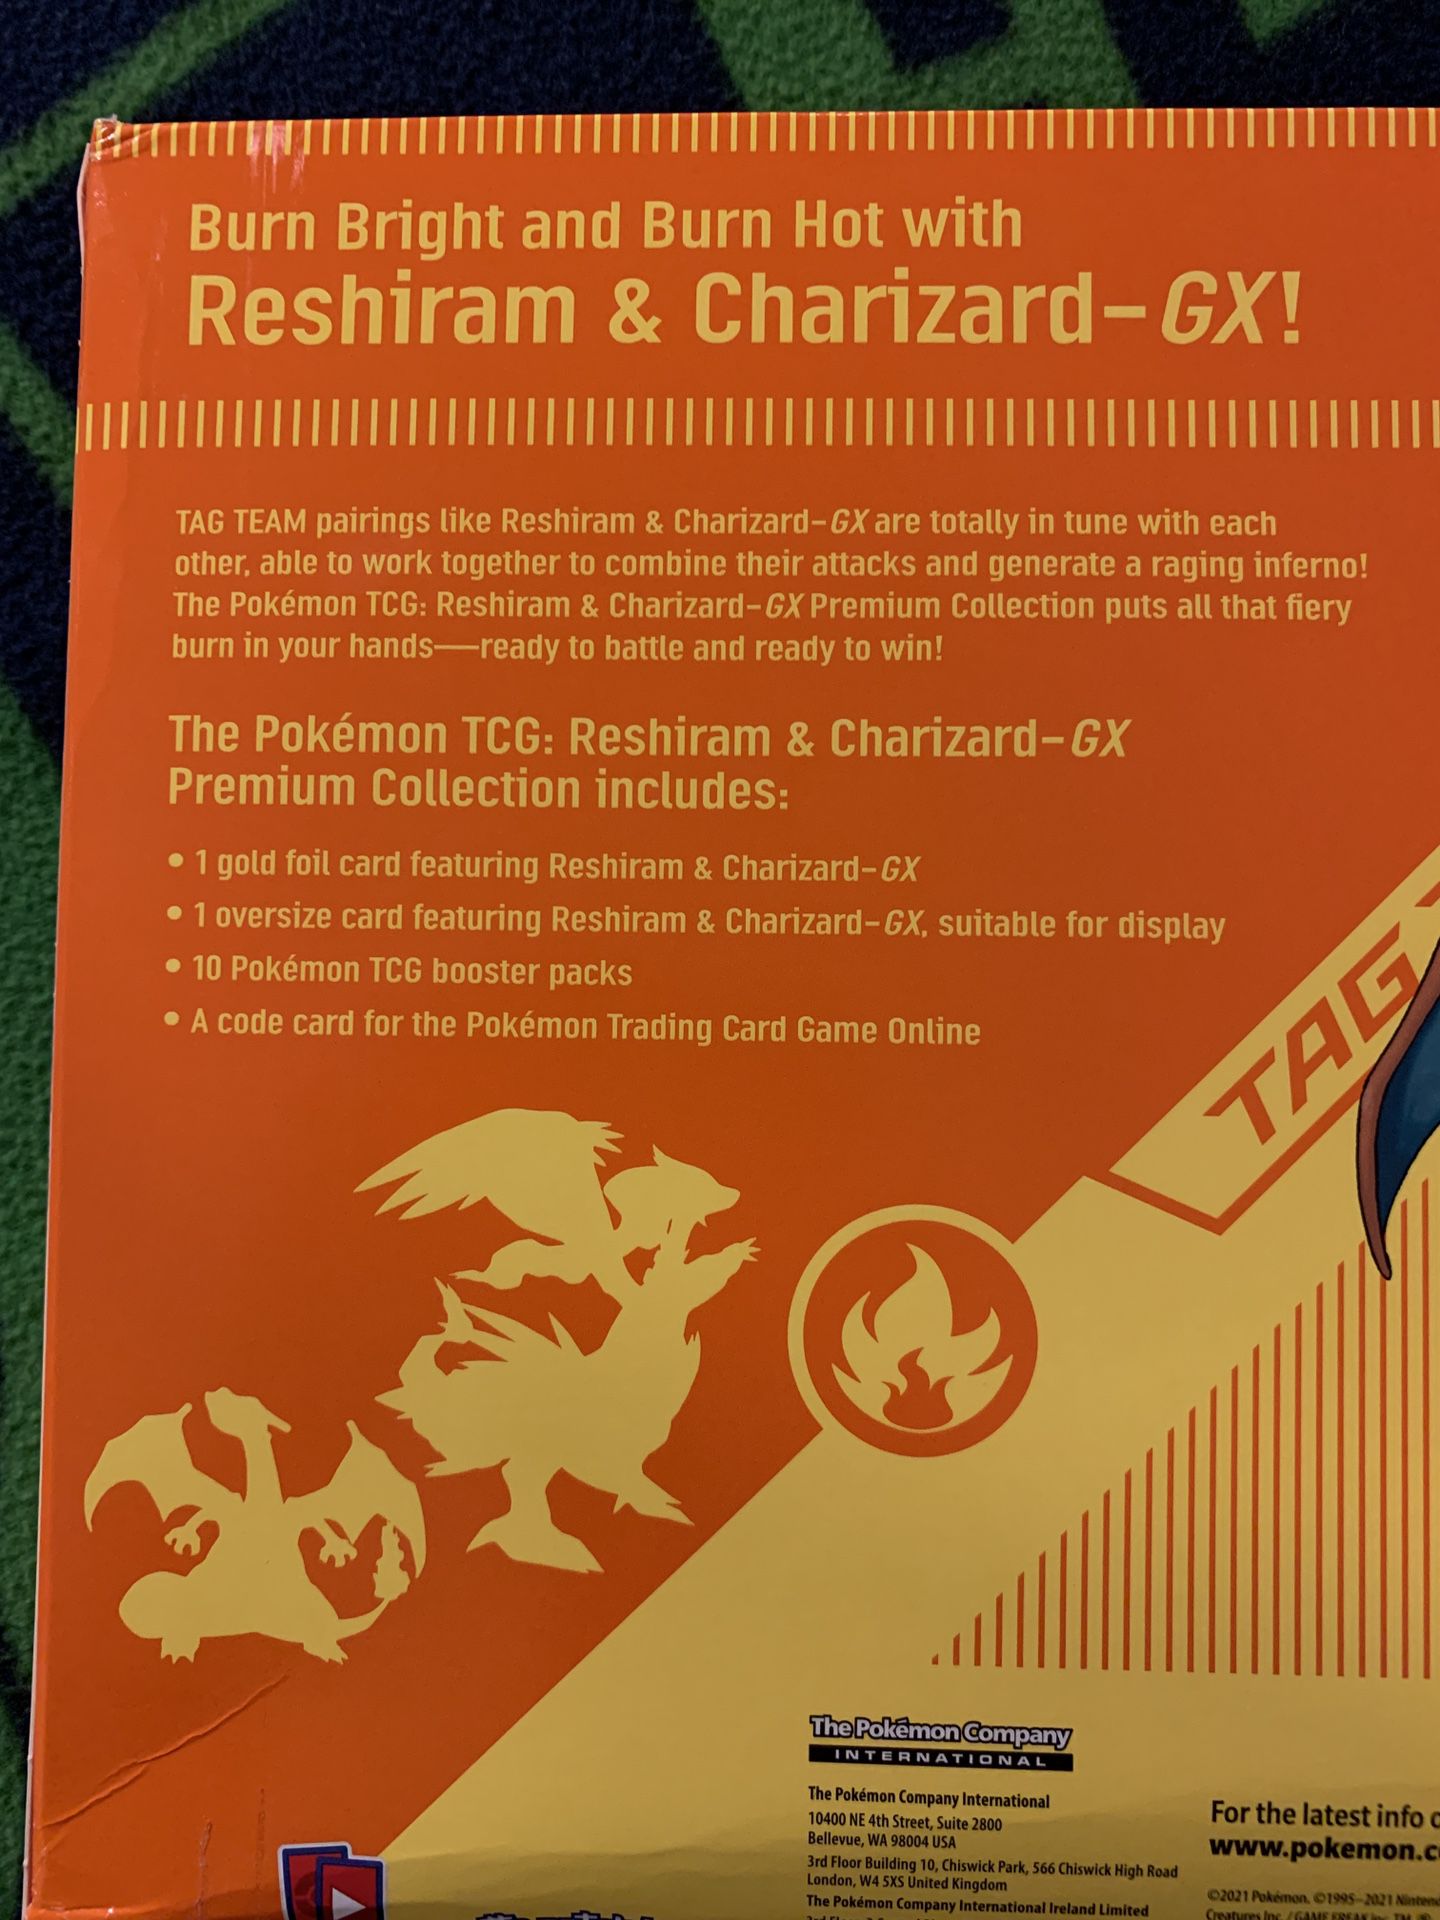 Reshiram & Charizard Premium Collection (USA exclusive